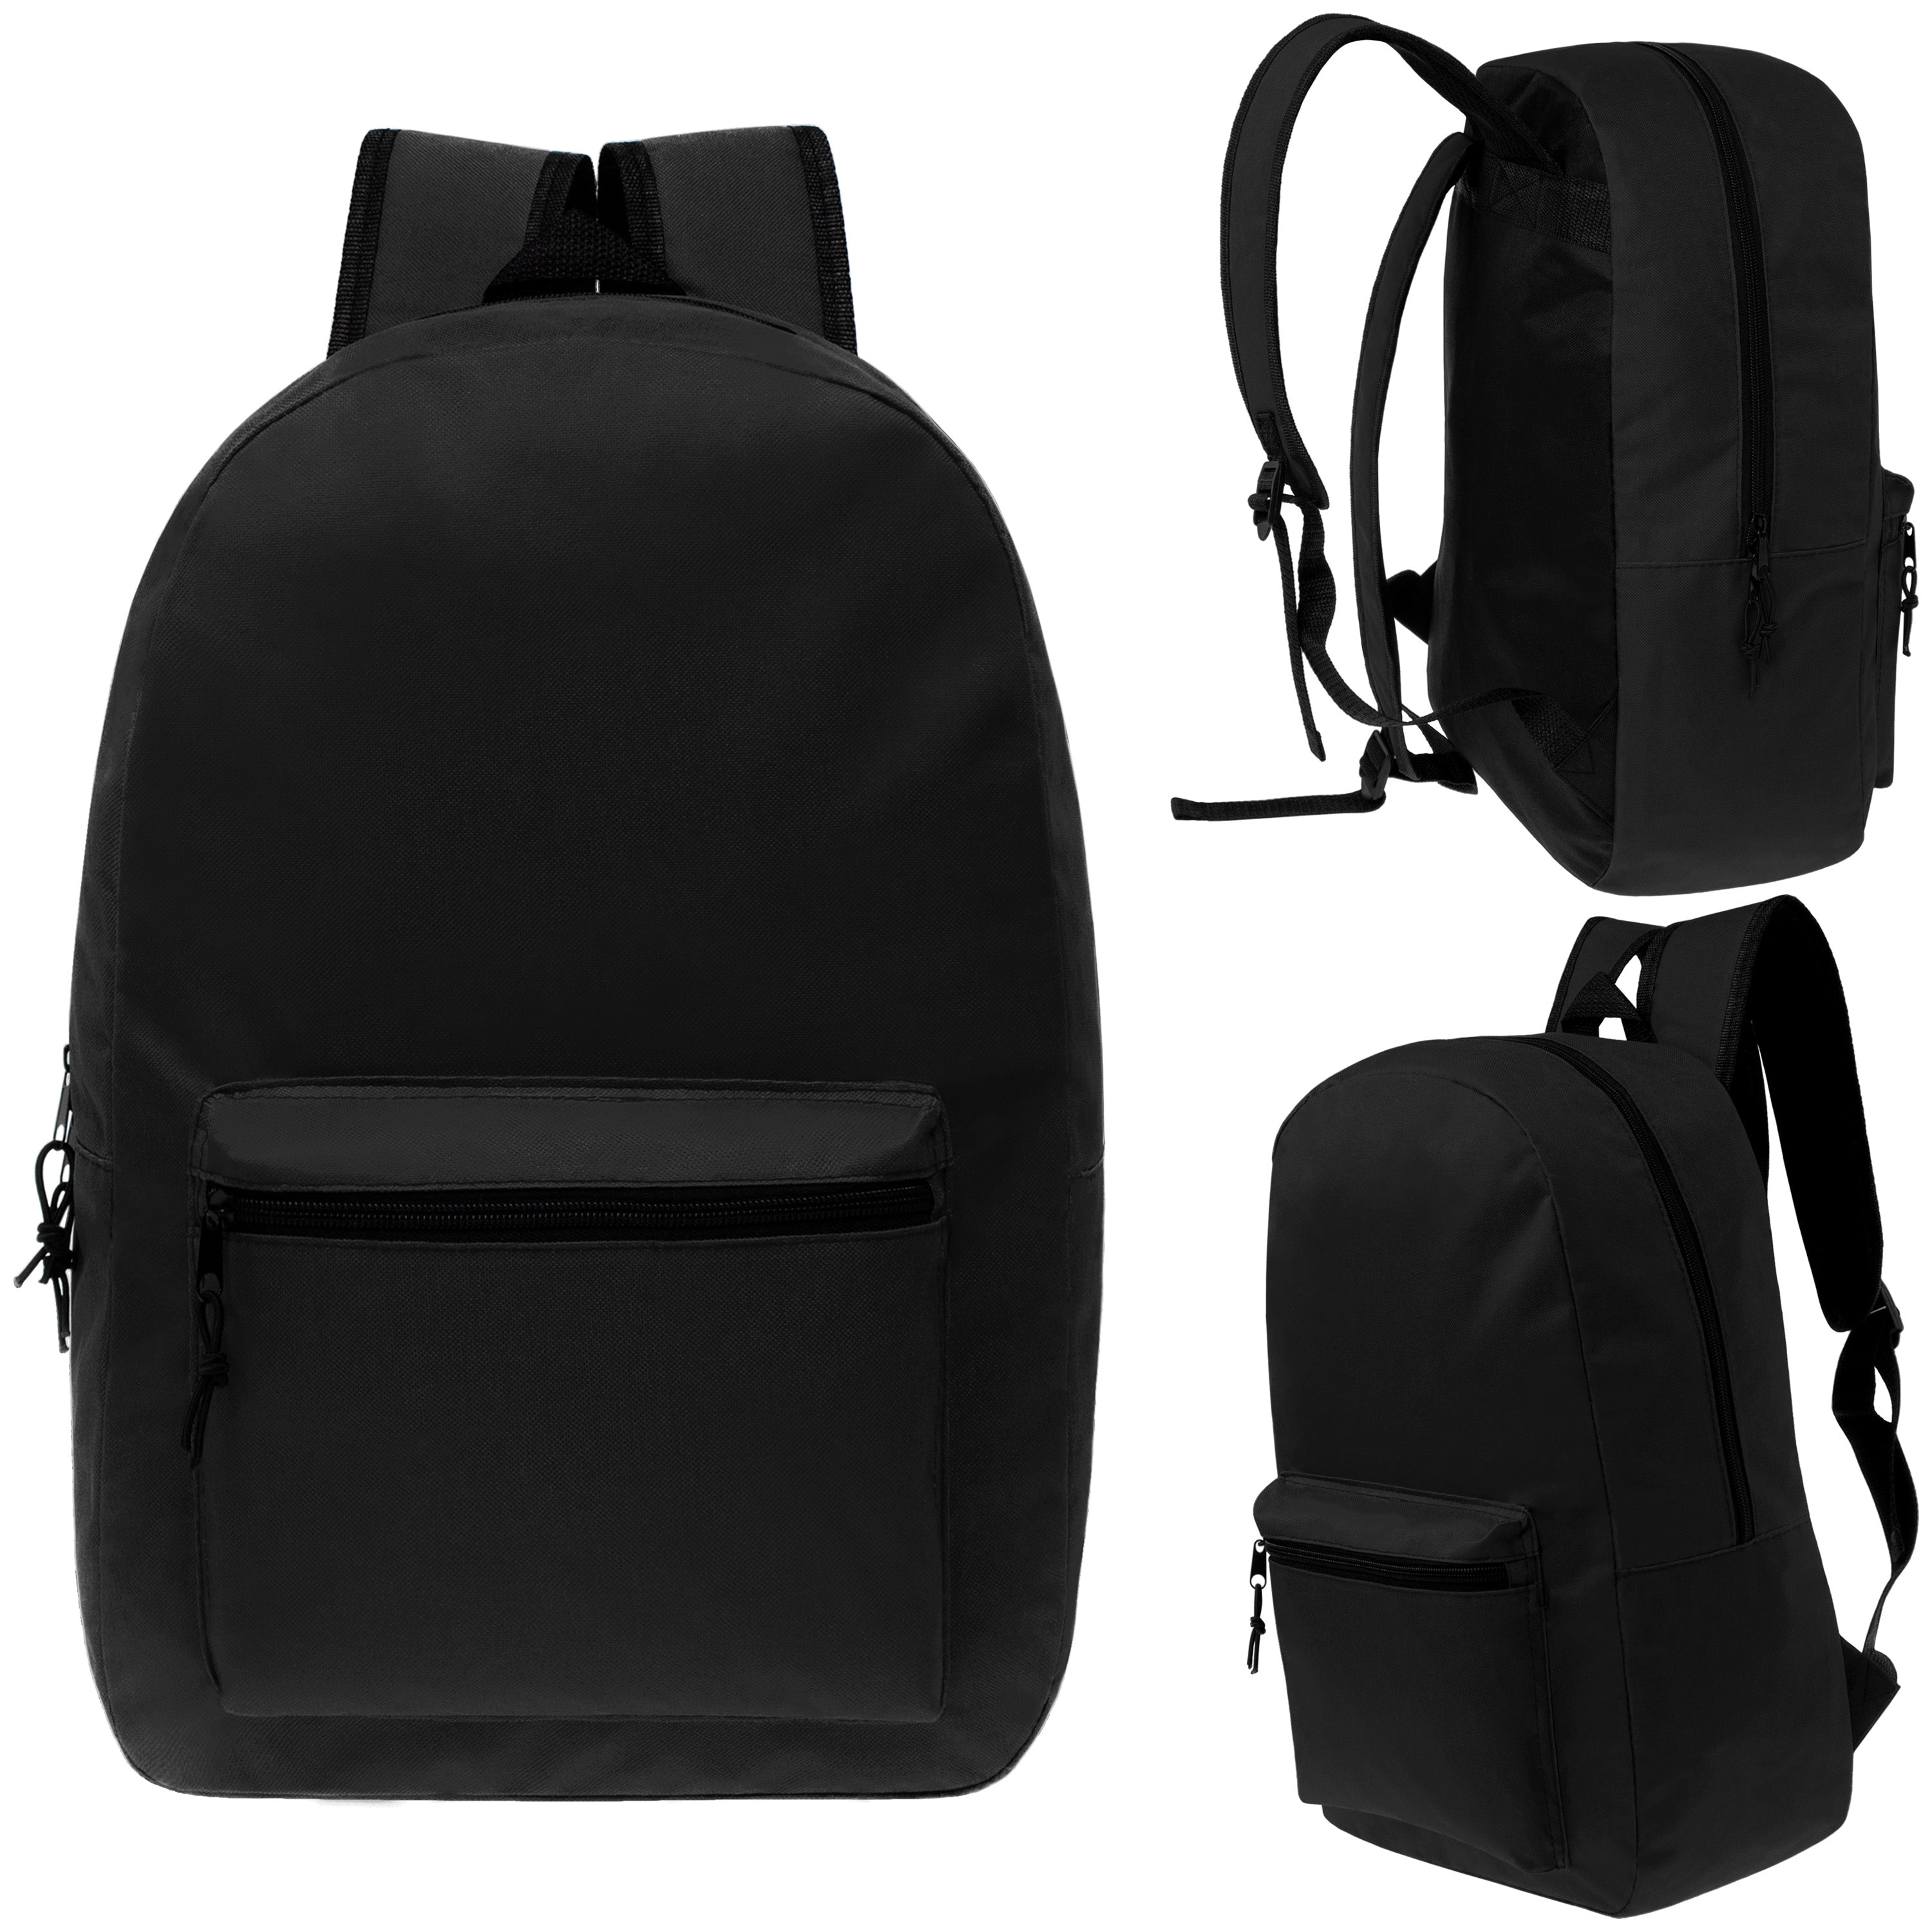 19 Wholesale Backpack in Black School Bookbag Cheap Discount